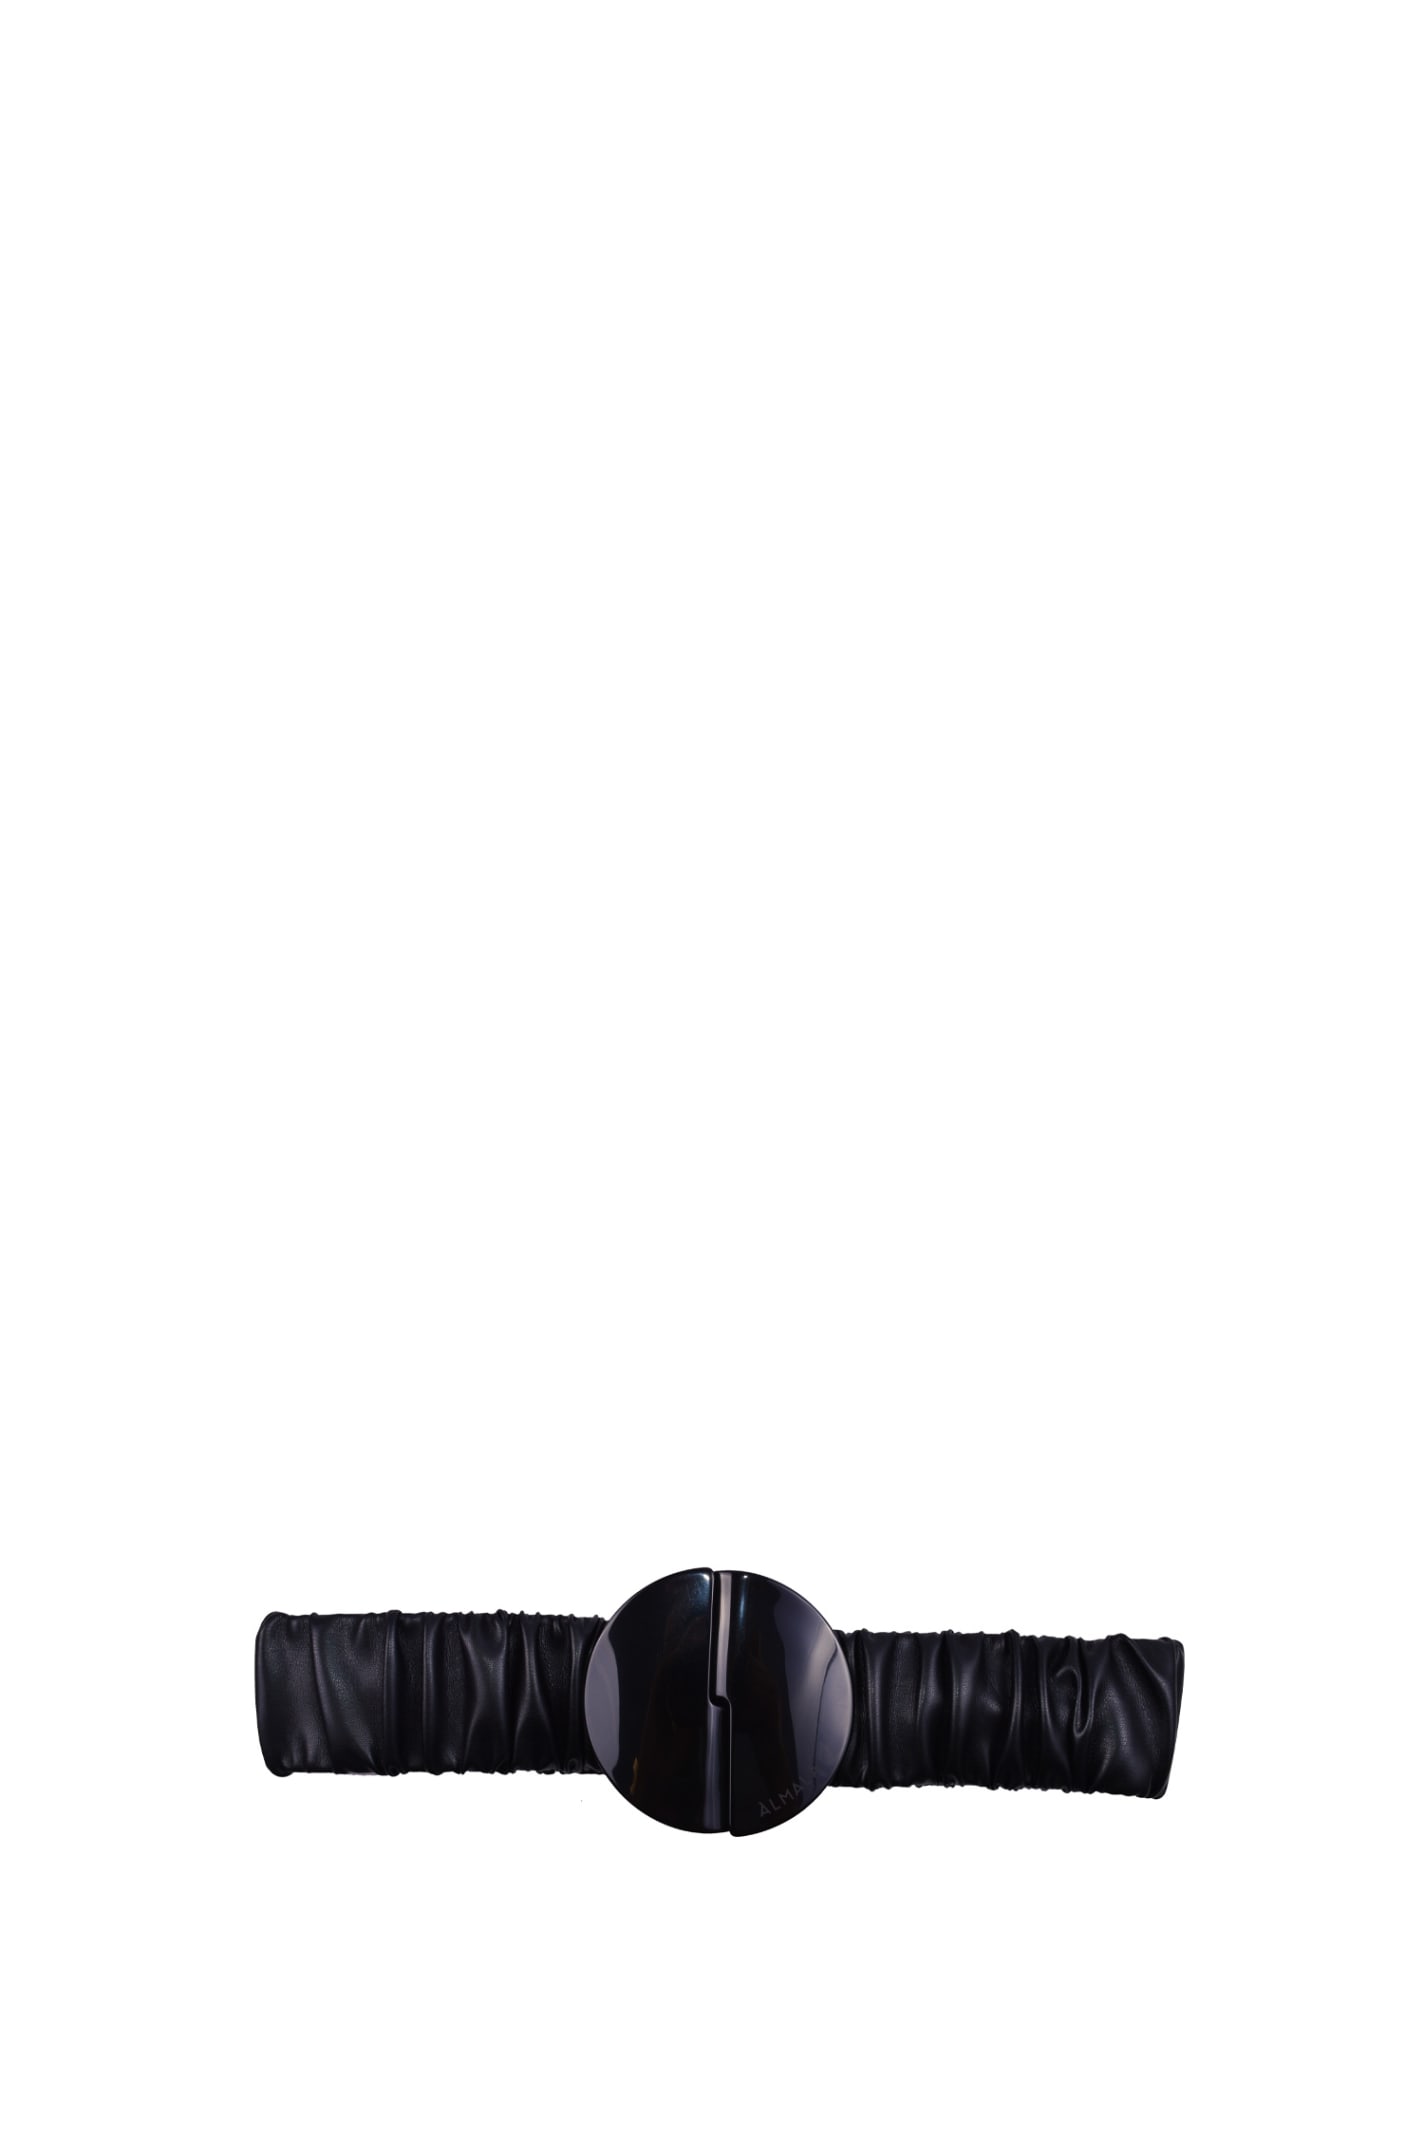 Almala Elastic Tissue Belt In Black